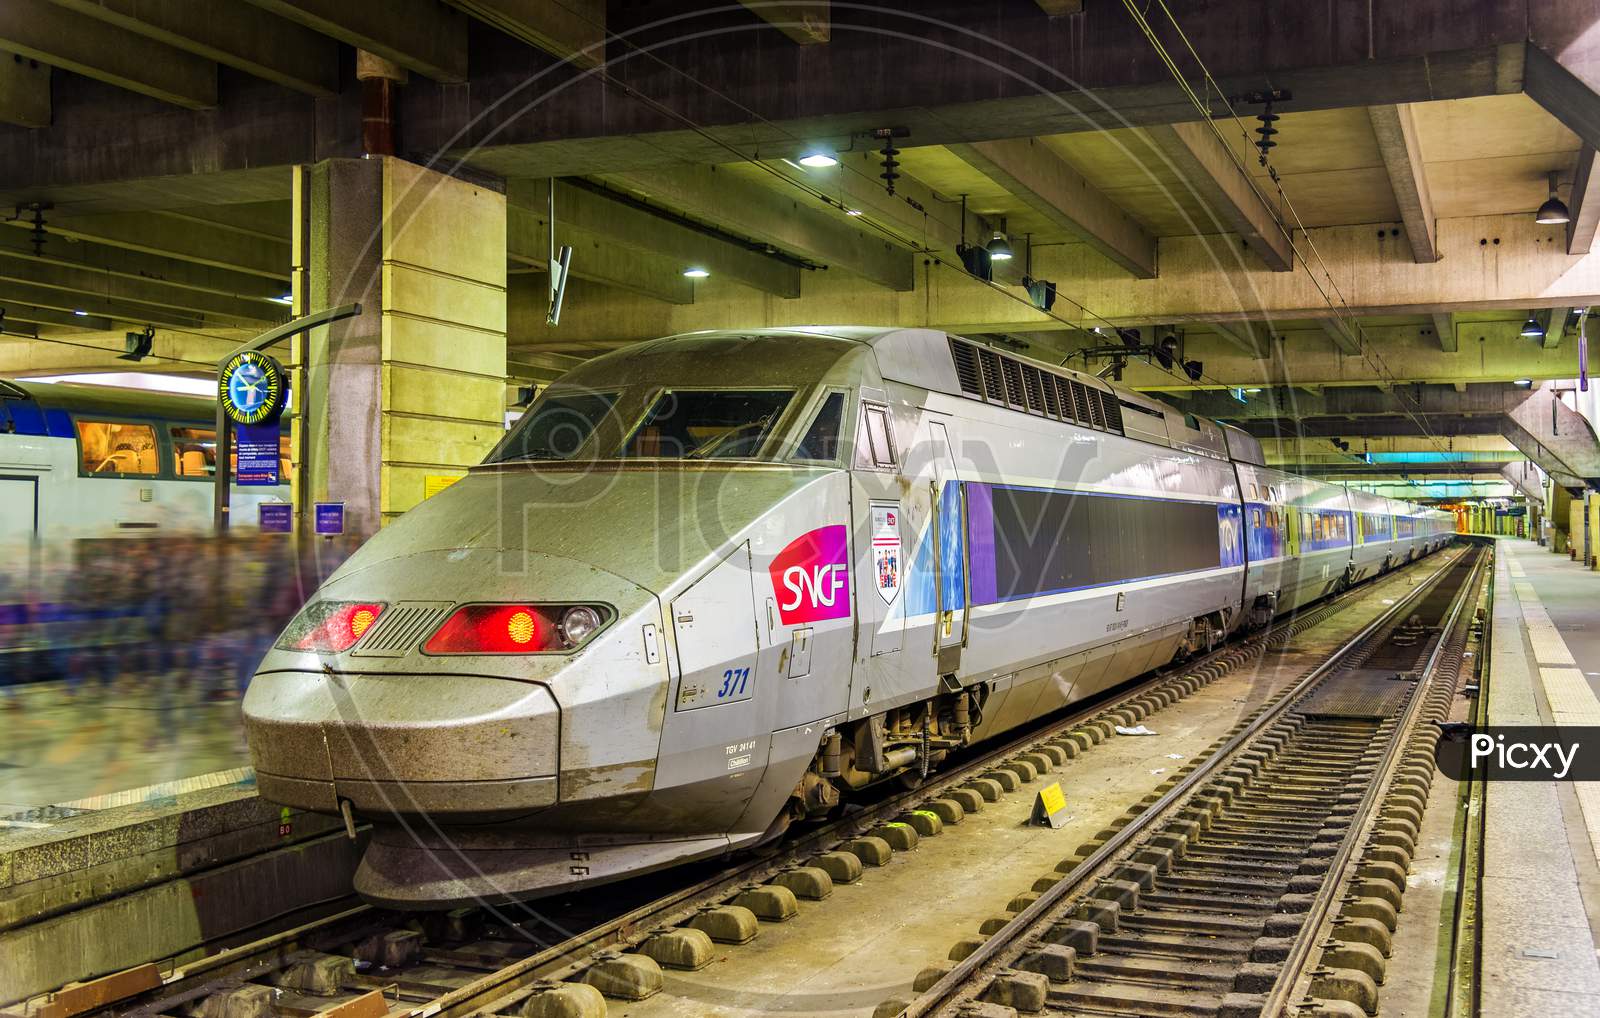 Tgv Atlantique Trainset At Montparnasse Railway Station